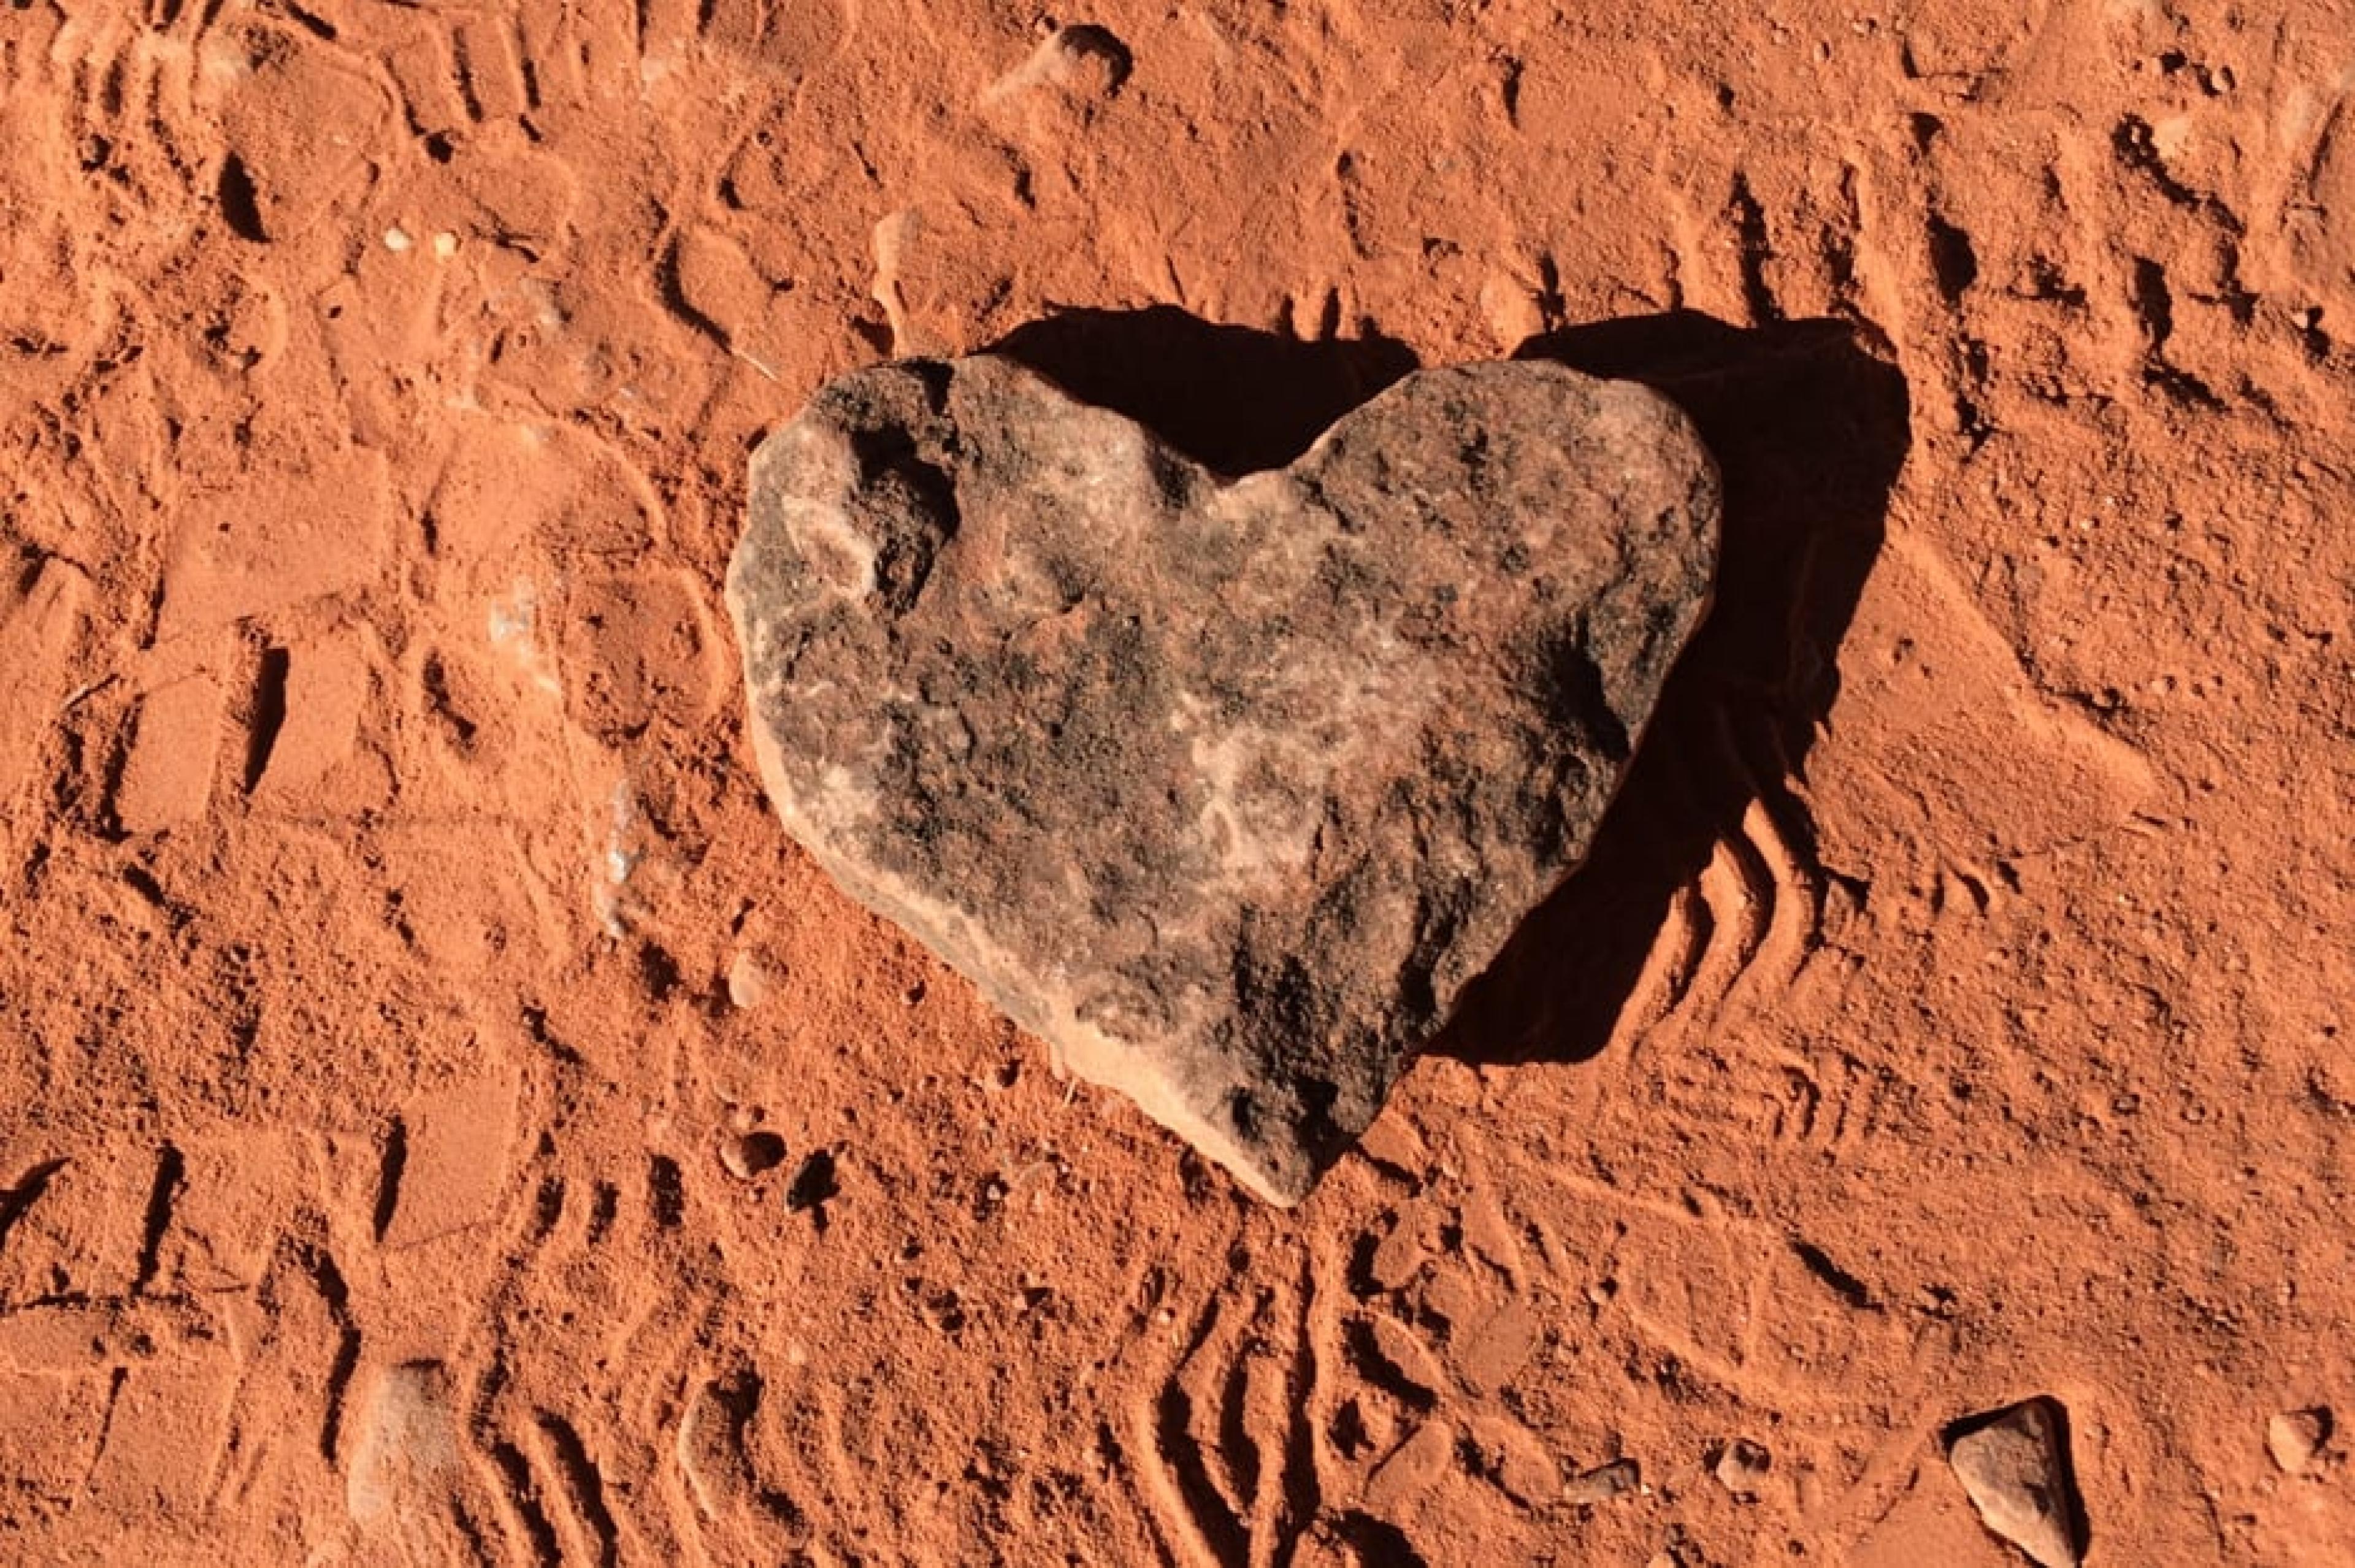 Mii Amo heart - Mii amo, Sedona, Arizona